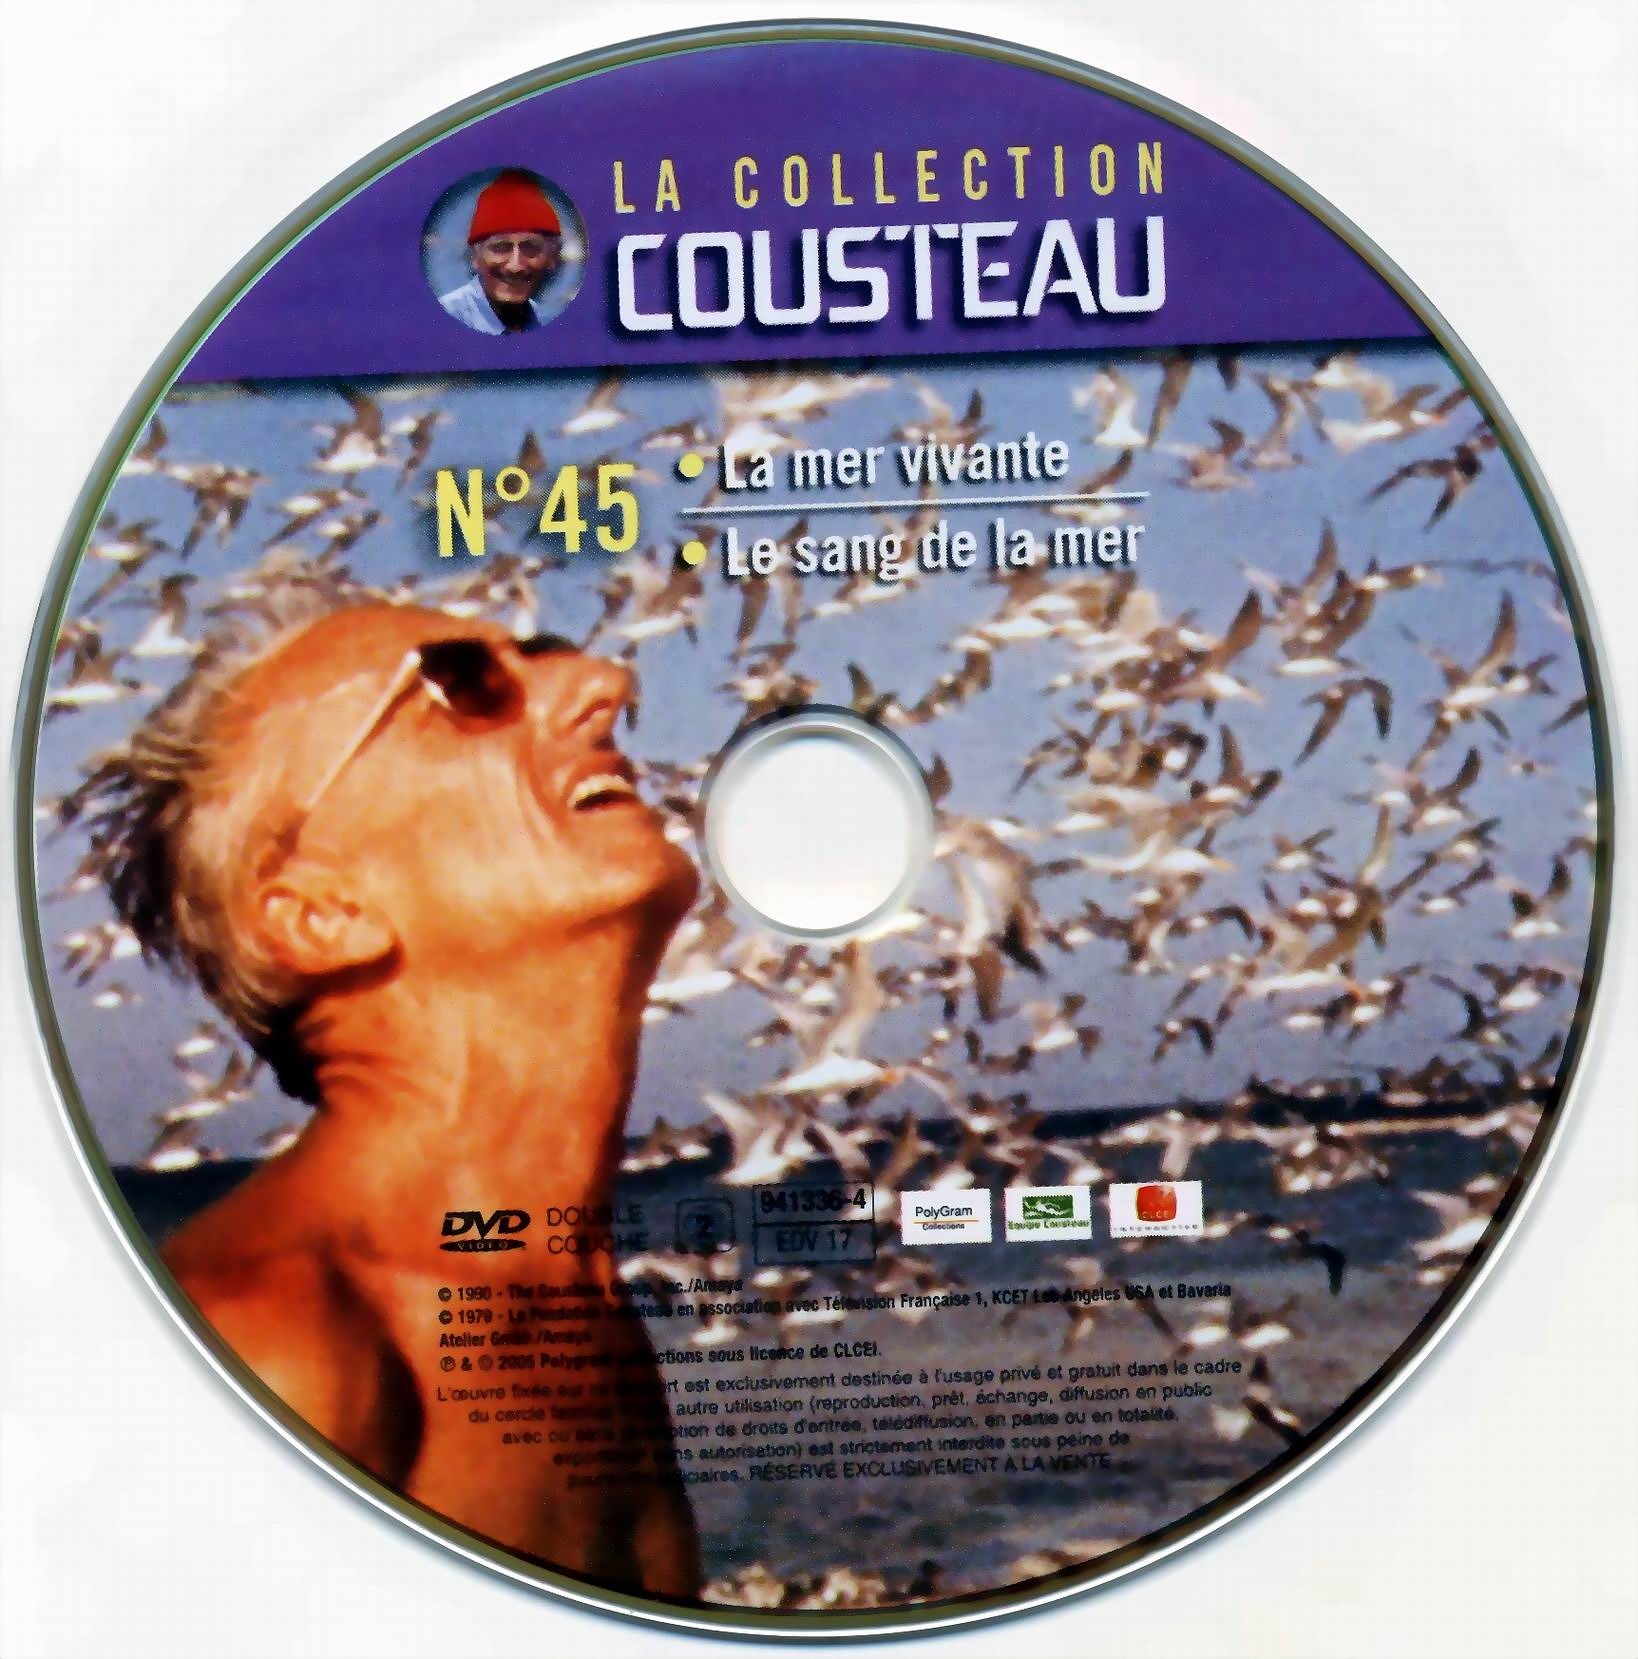 Cousteau Collection vol 45